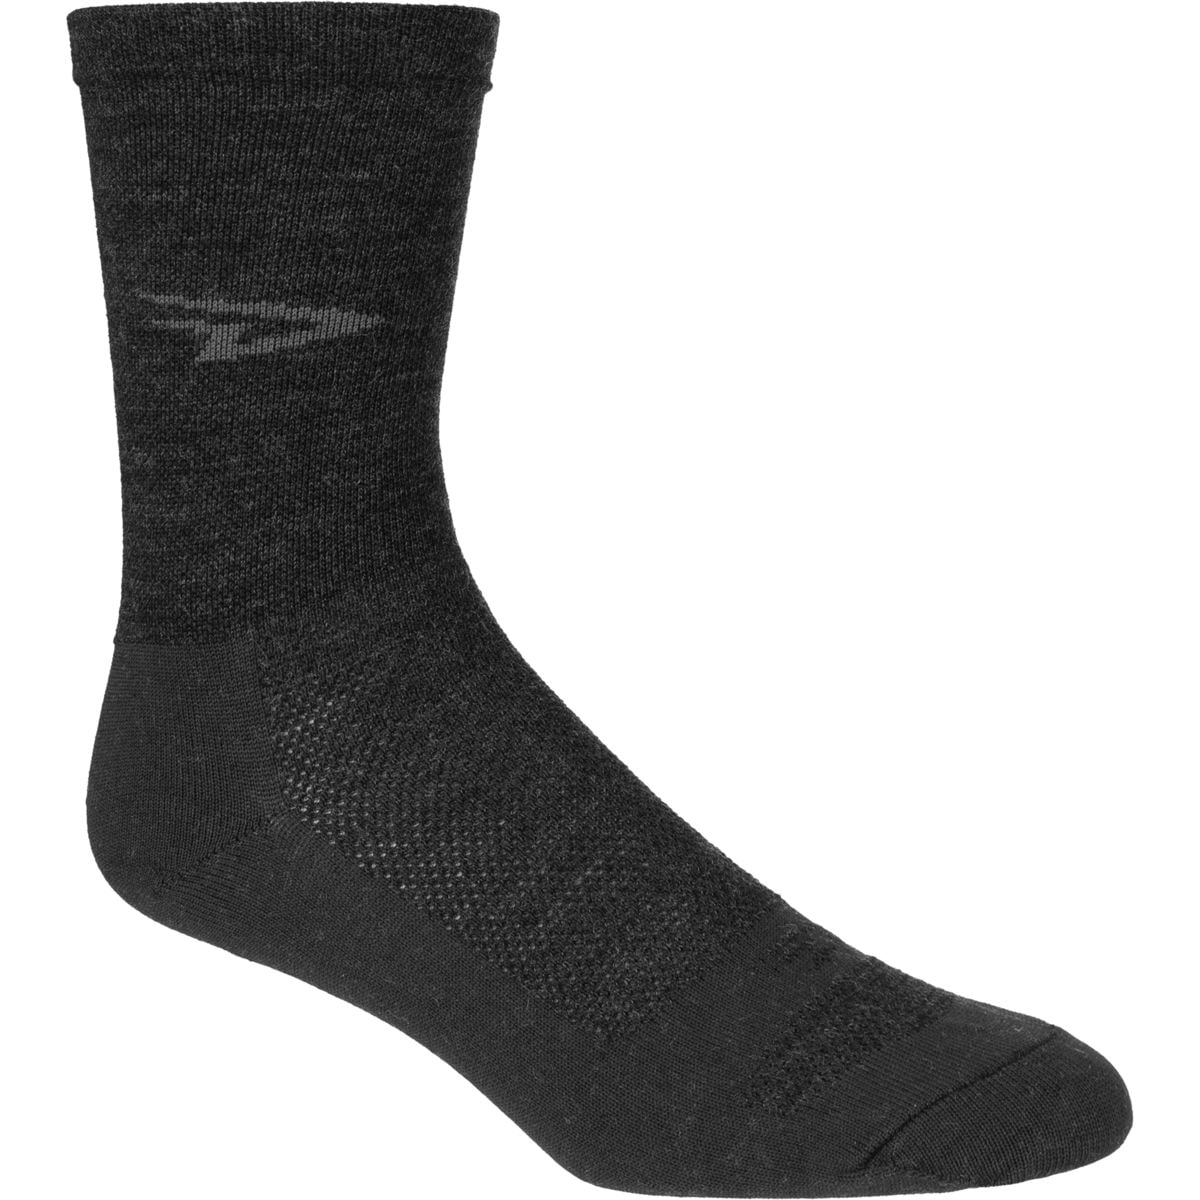 DeFeet Wooleator High Top 5in Socks Men's